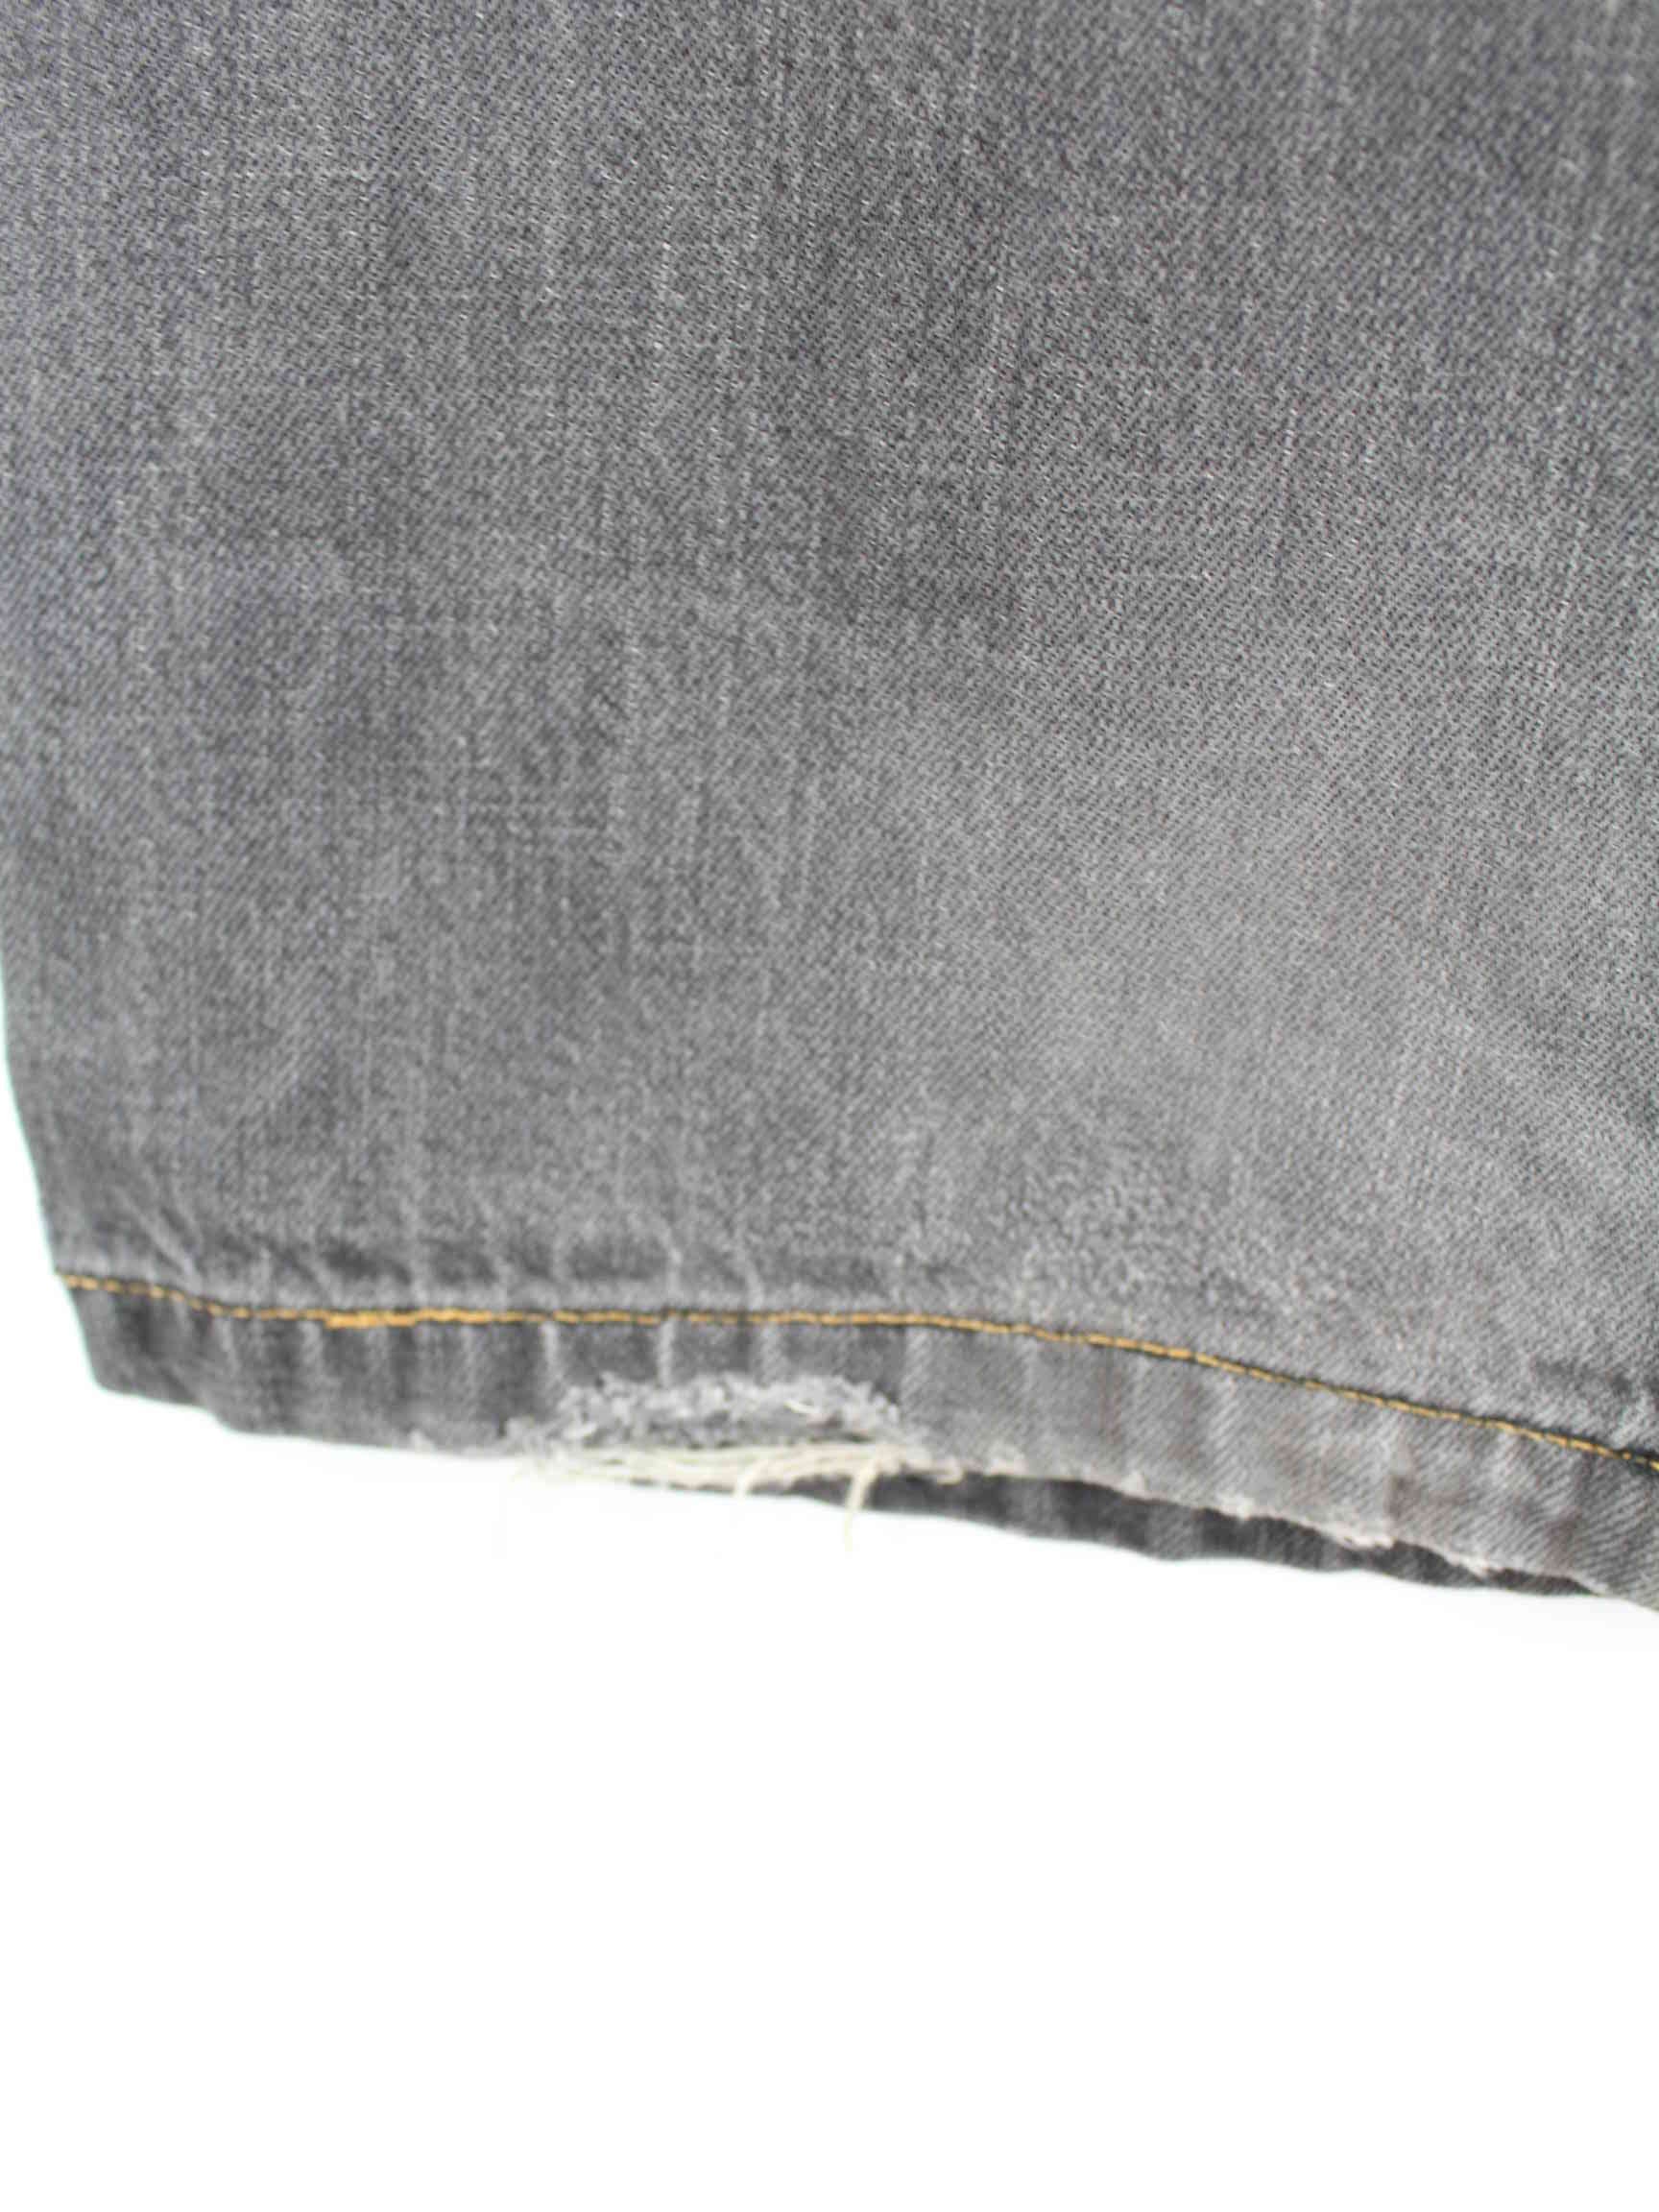 Ecko y2k Embroidered Jeans Grau W28 L30 (detail image 4)